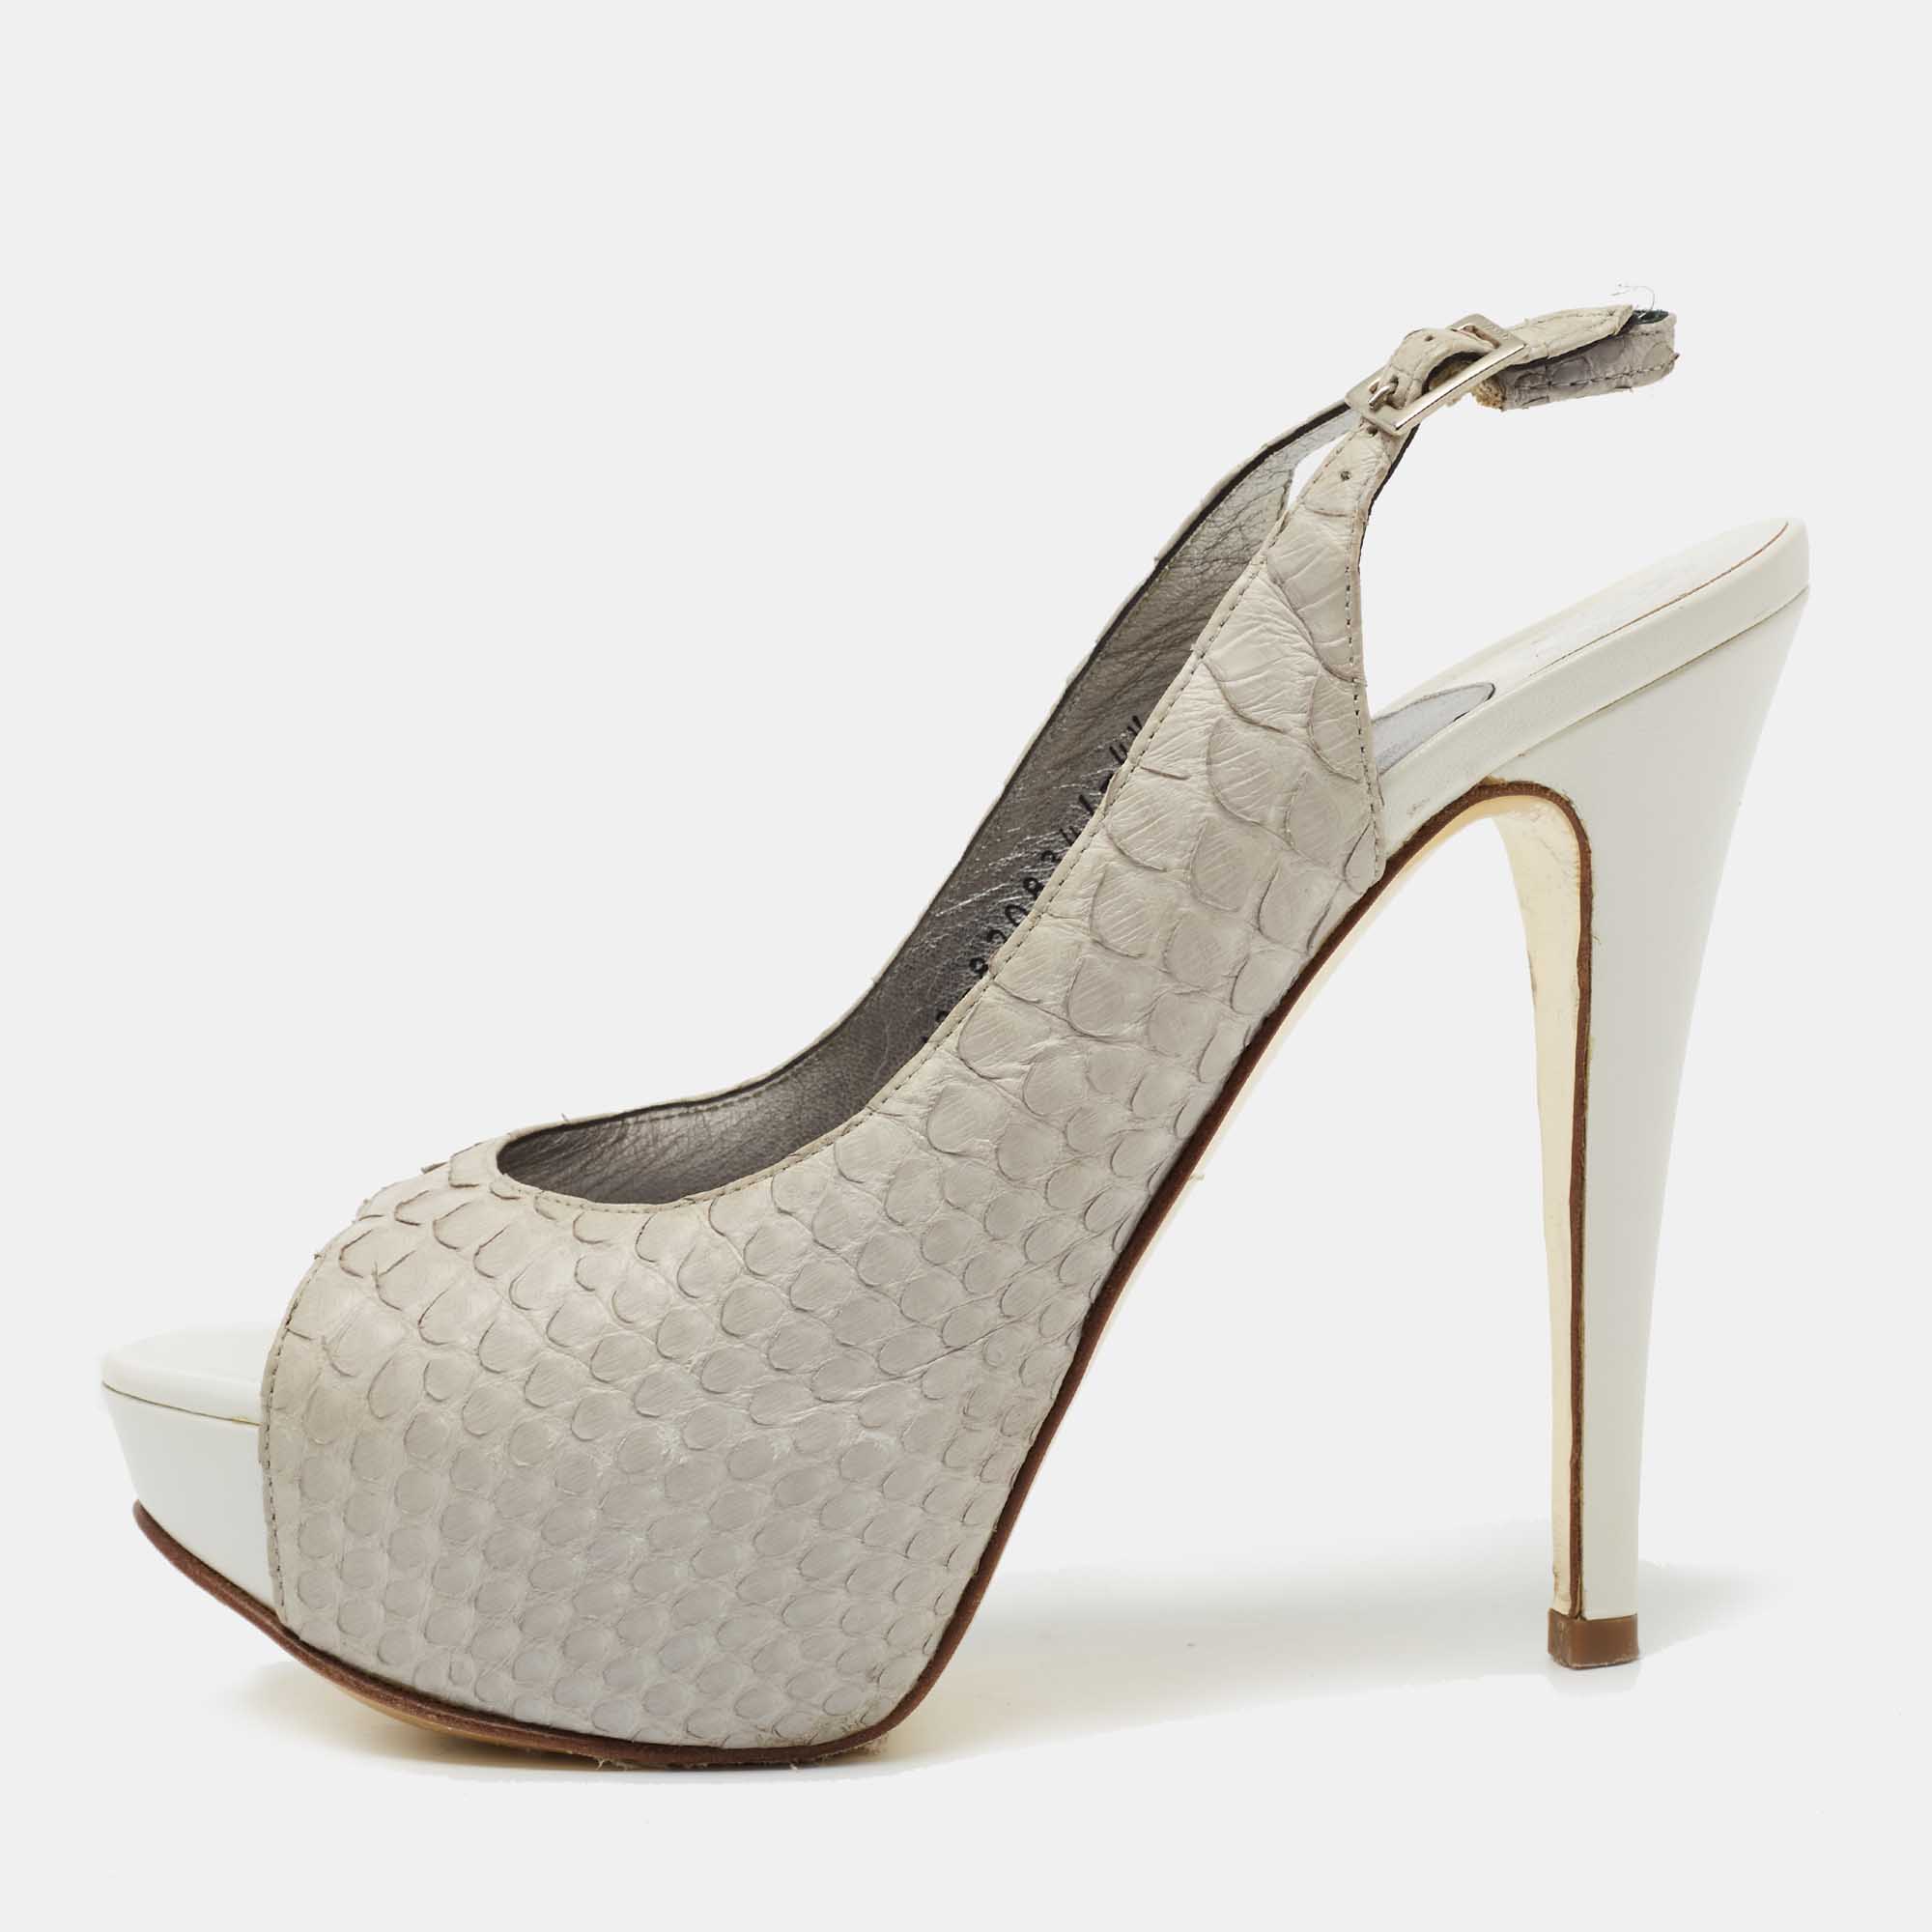 Gina grey python leather peep-toe platform slingback sandals size 37.5